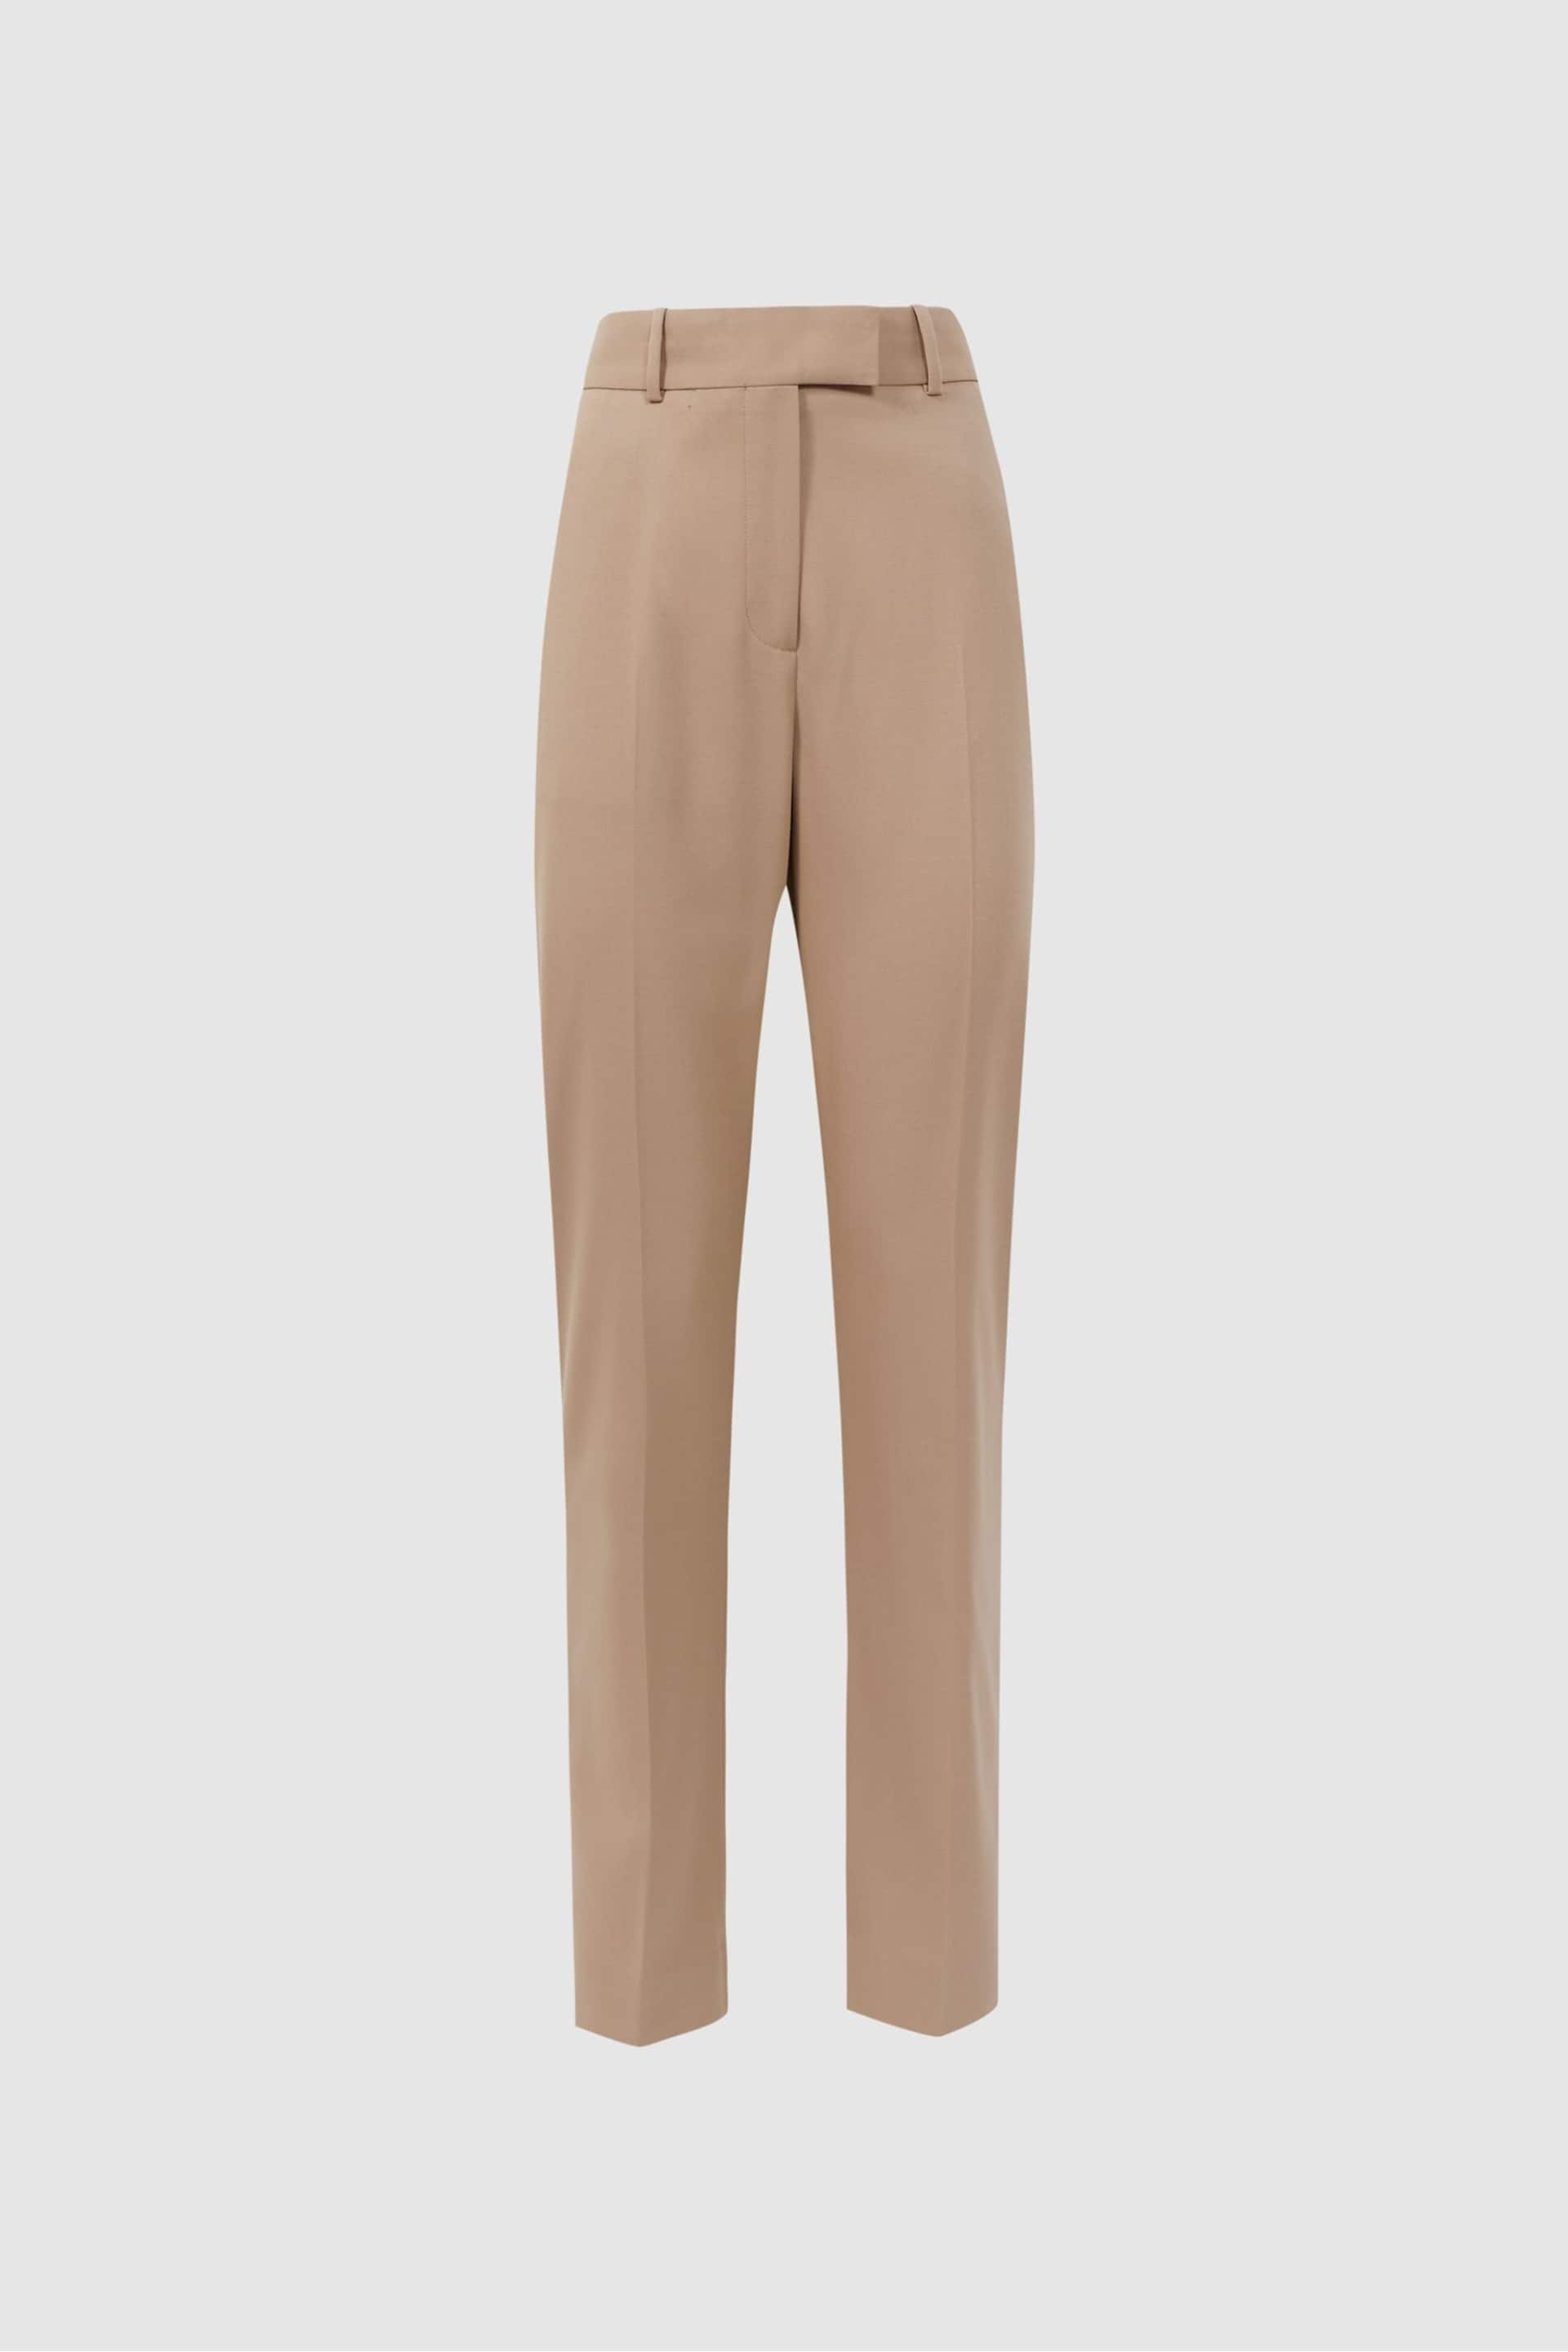 Reiss Camel Marlie Slim Fit Wool Blend Suit Trousers - Image 2 of 4